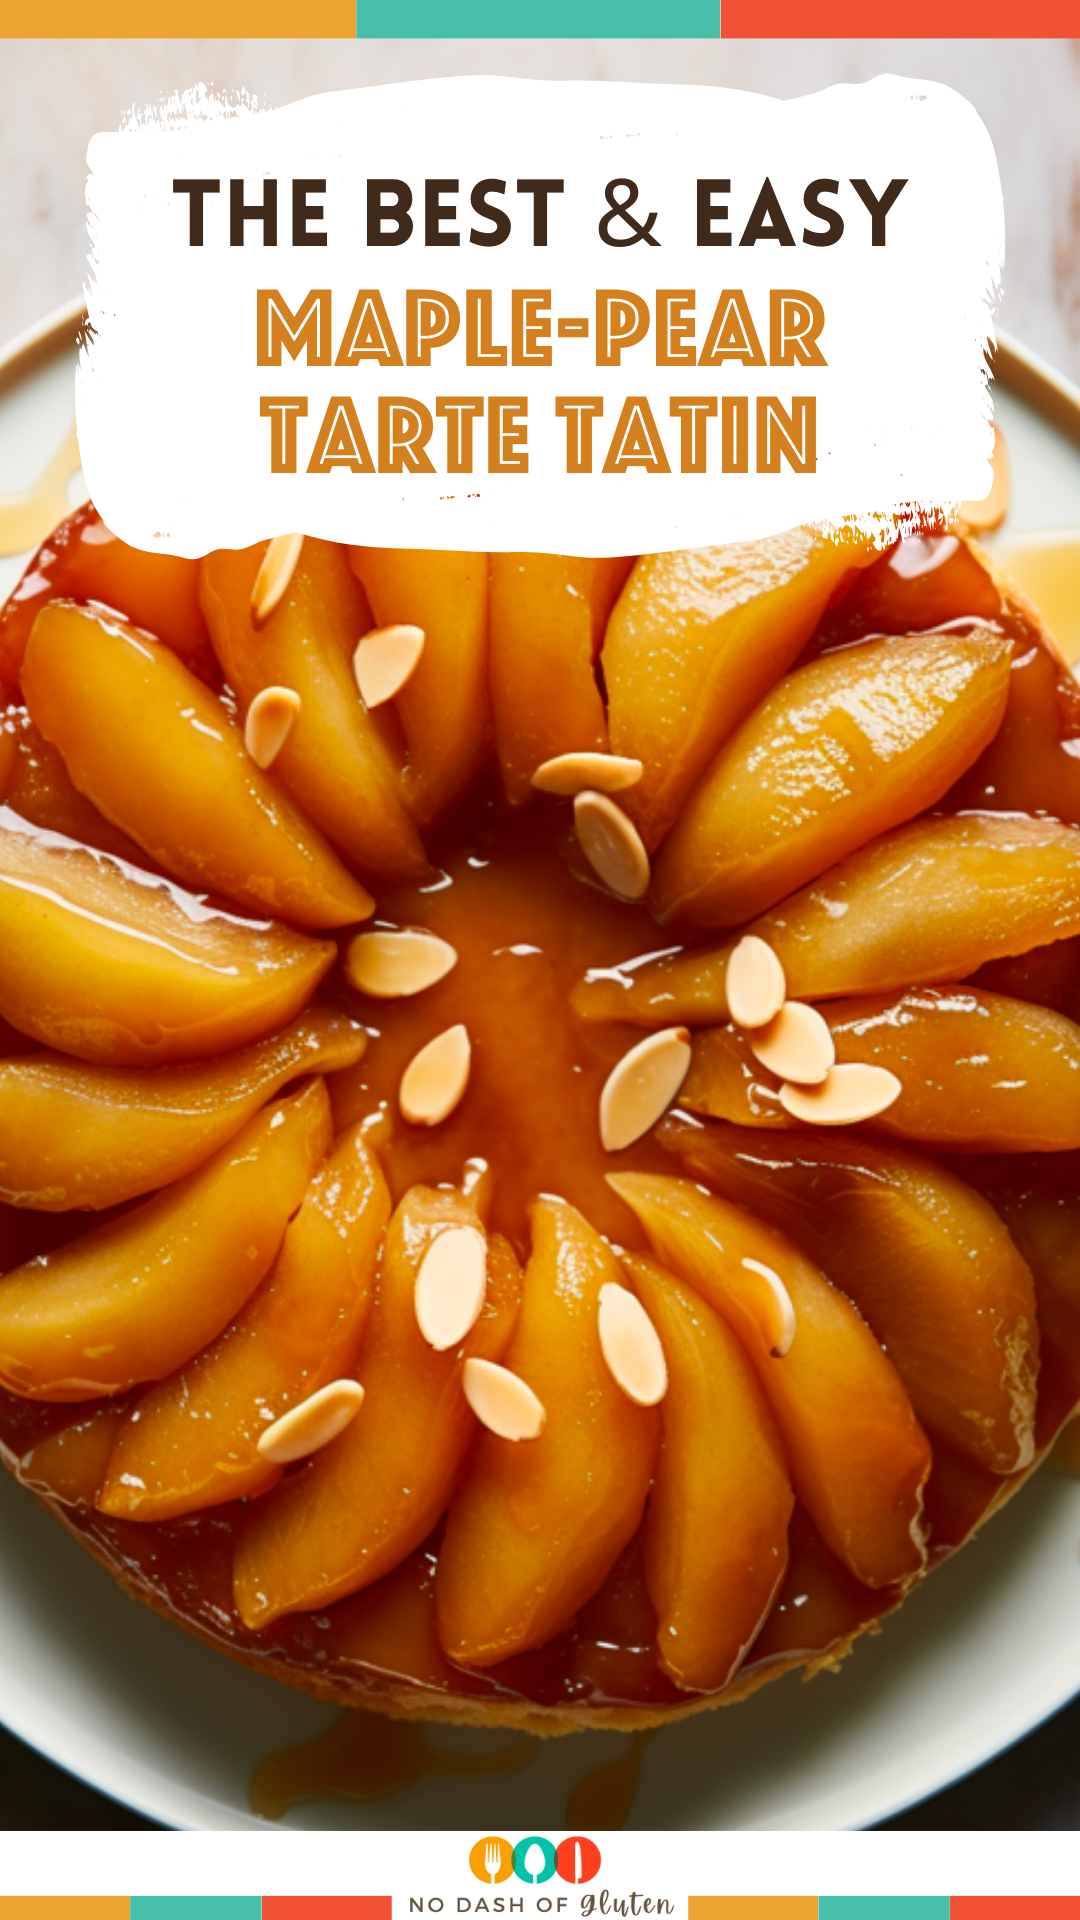 Maple-Pear Tarte Tatin